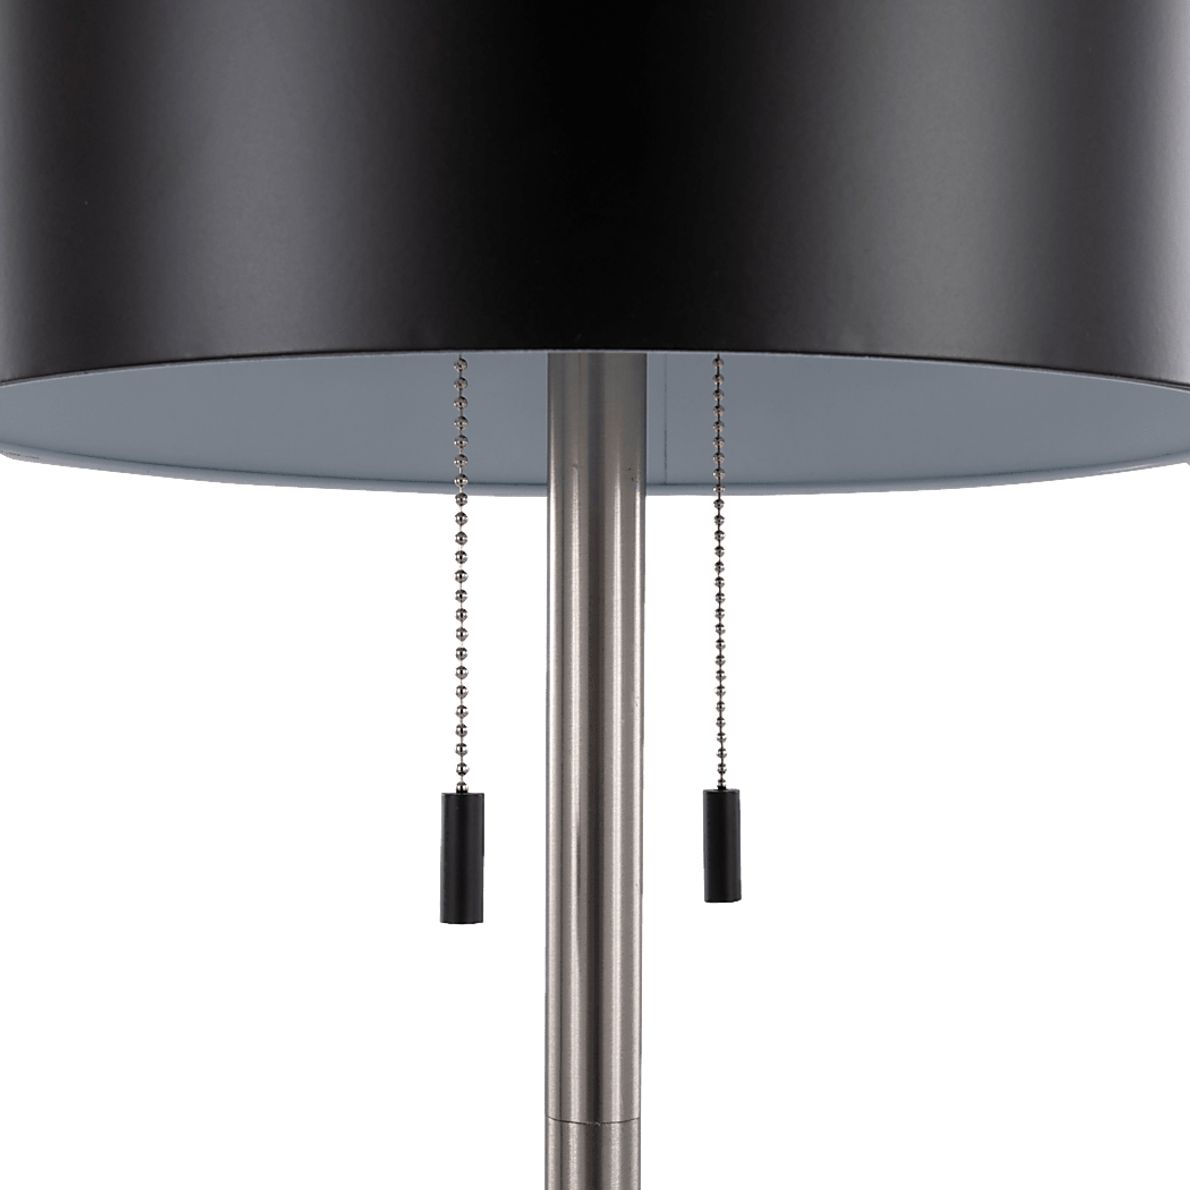 Araglin Black Table Lamp